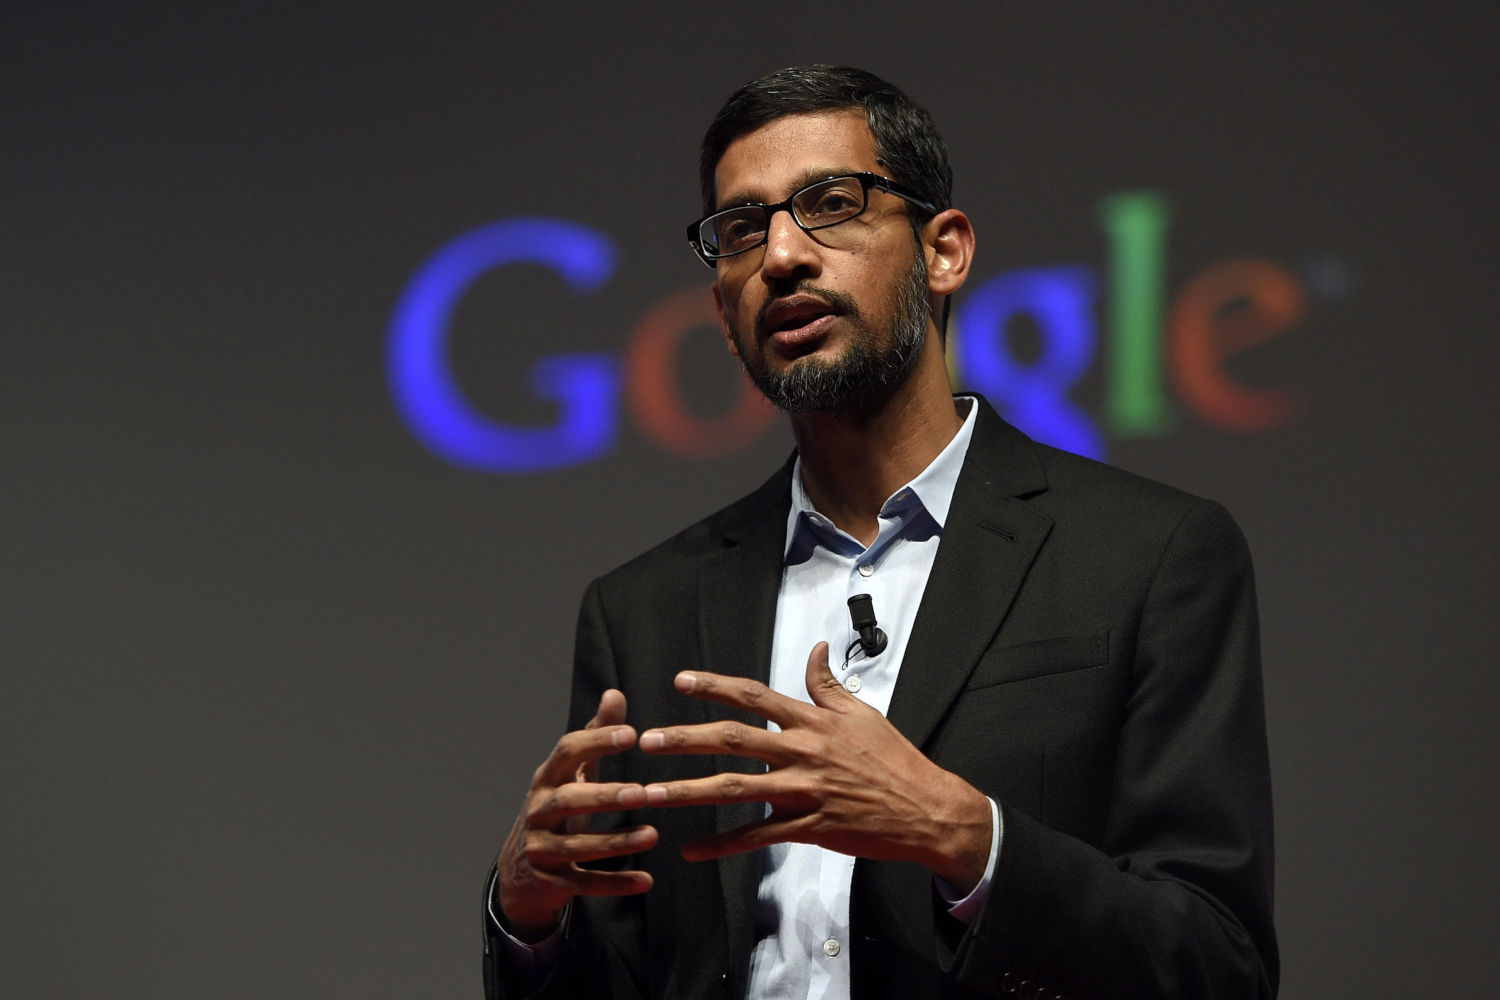 Sundar Pichai / CEO / Google